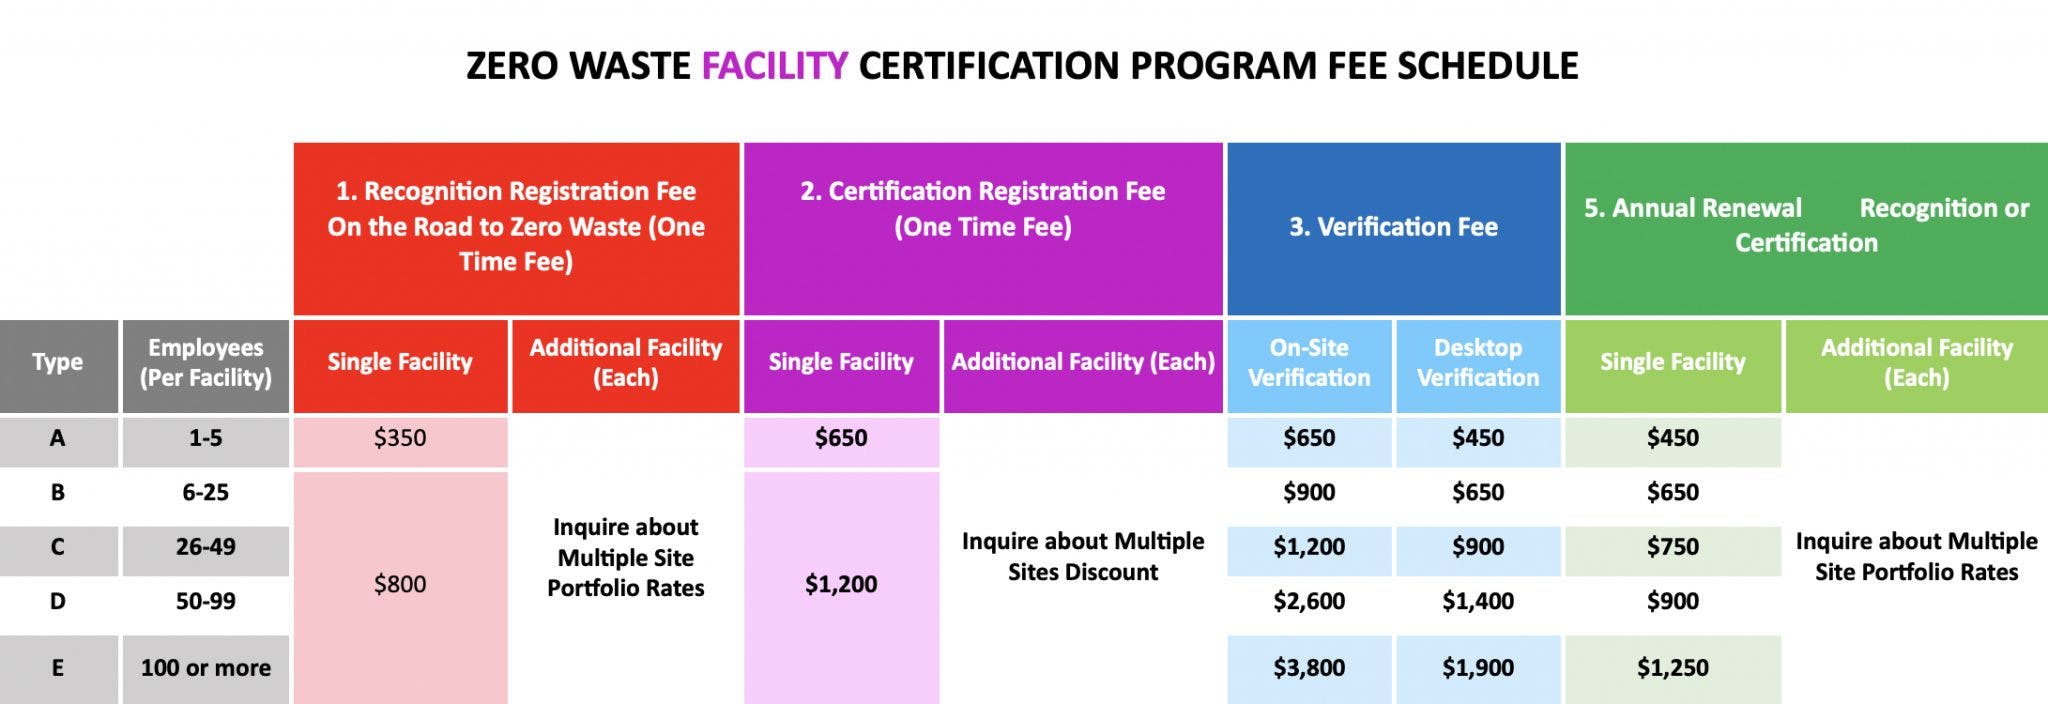 Zero Waste Facility Certification Program Fee Schedule